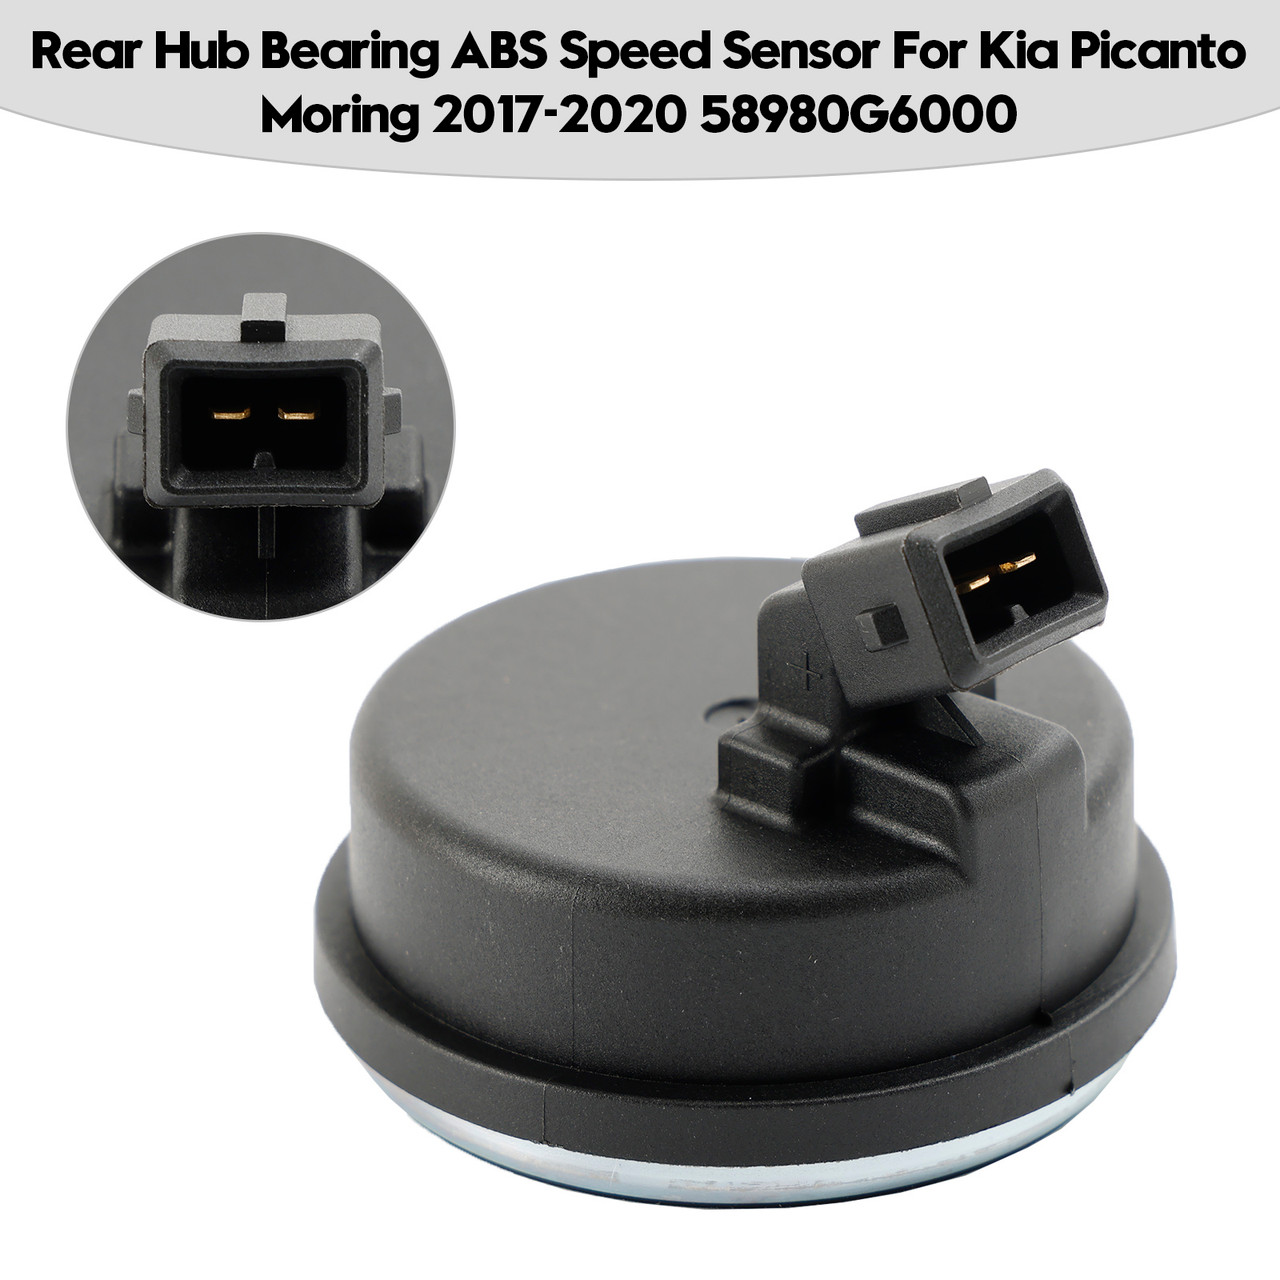 Rear Hub Bearing ABS Speed Sensor For Kia Picanto Moring 2017-2020 58980G6000